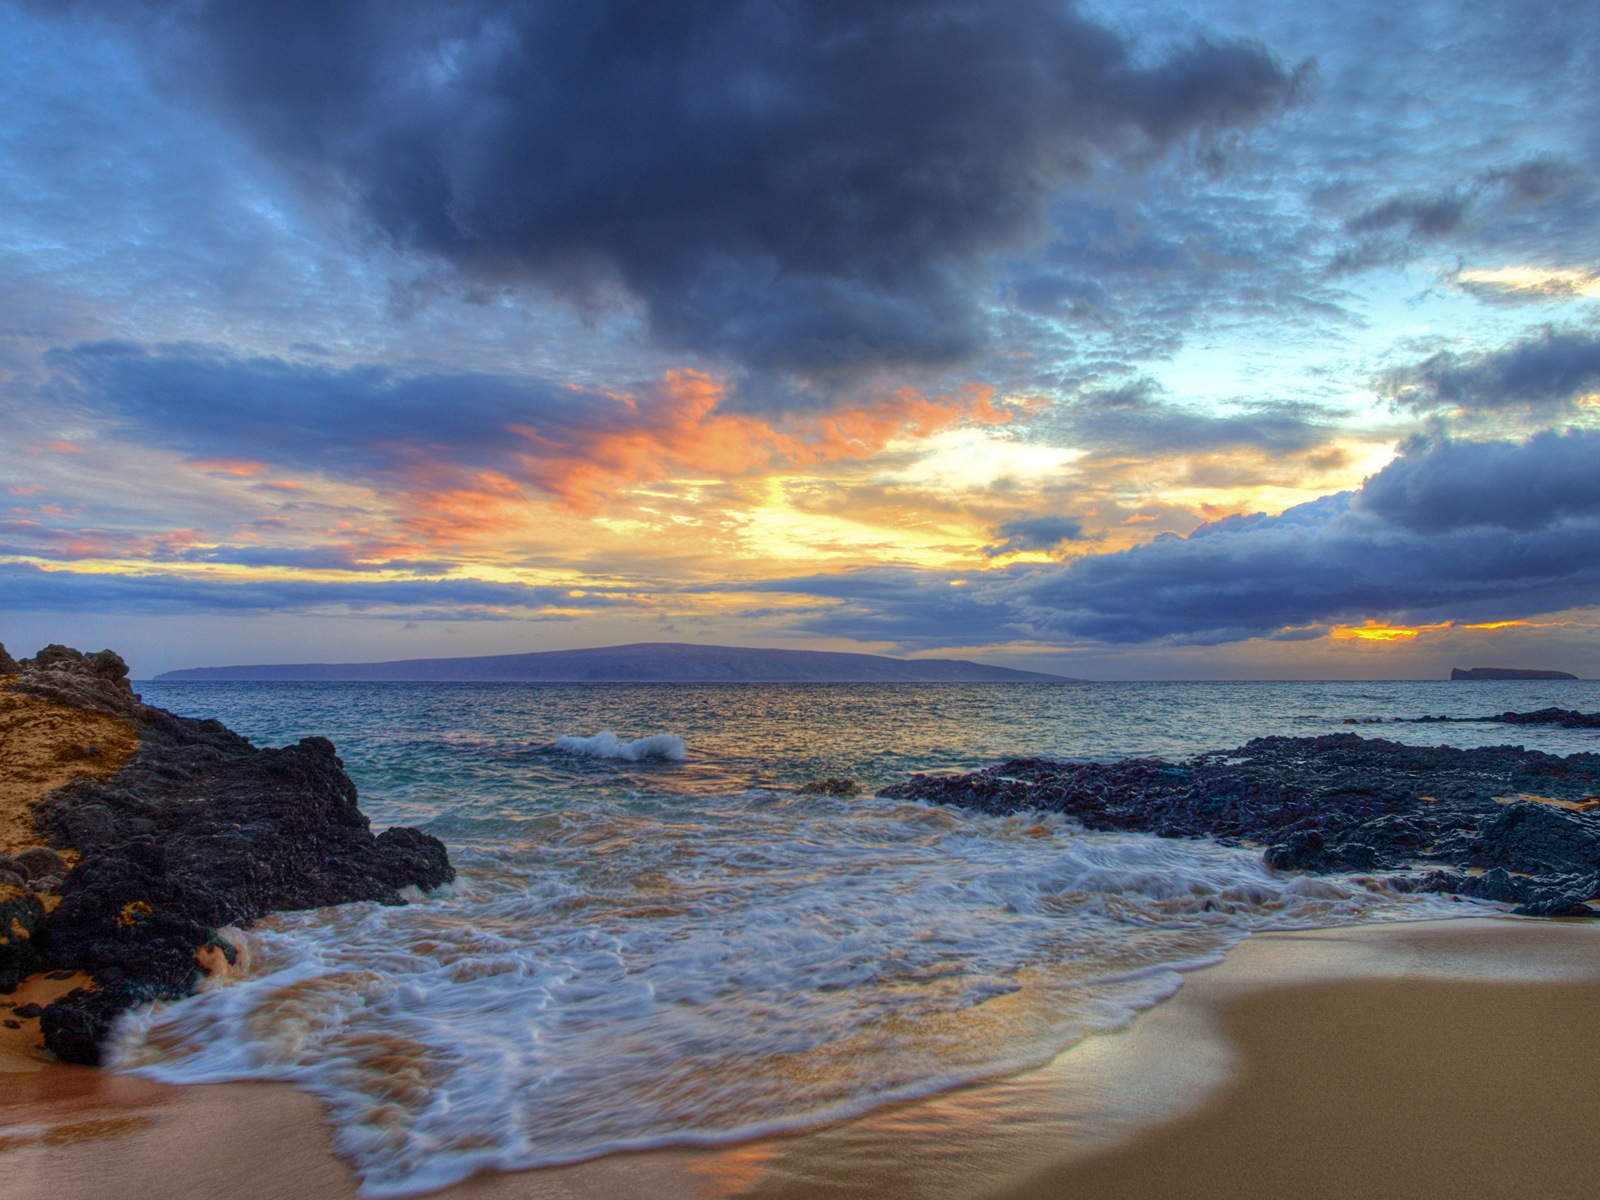 Windows 8 theme wallpaper: Beach sunrise and sunset views #9 - 1600x1200